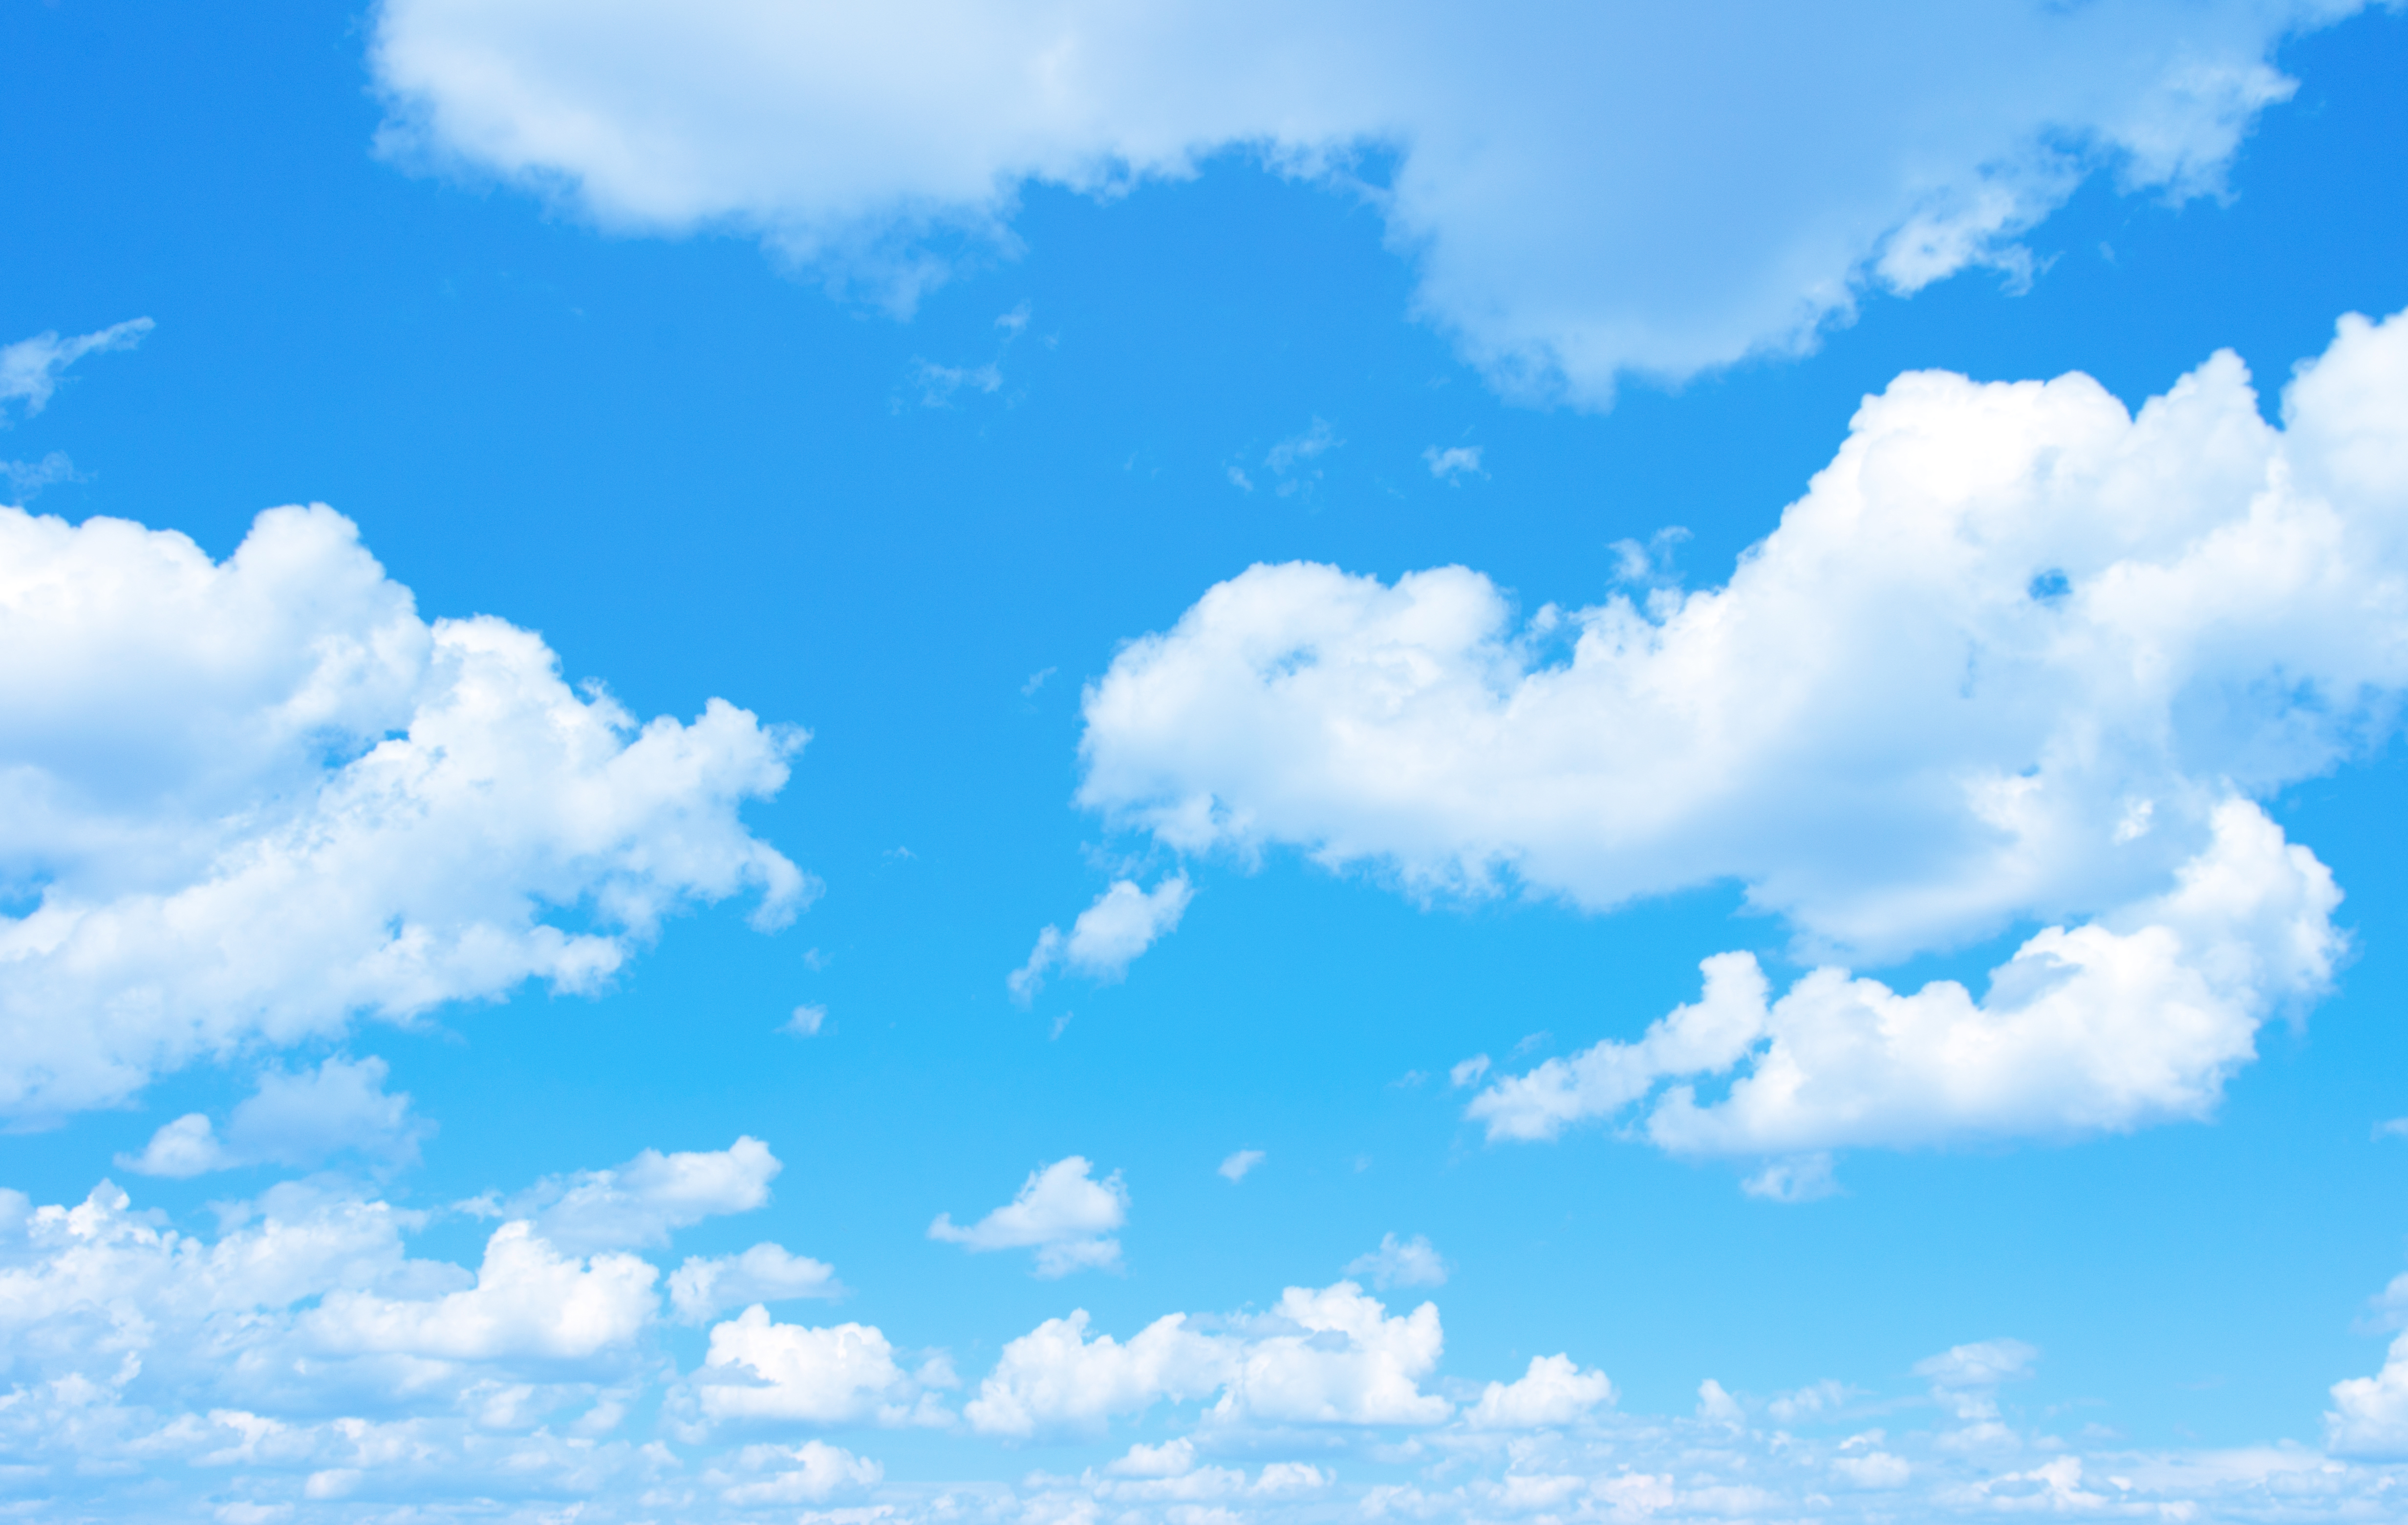 Blue Sky with Clouds Wallpaper - WallpaperSafari